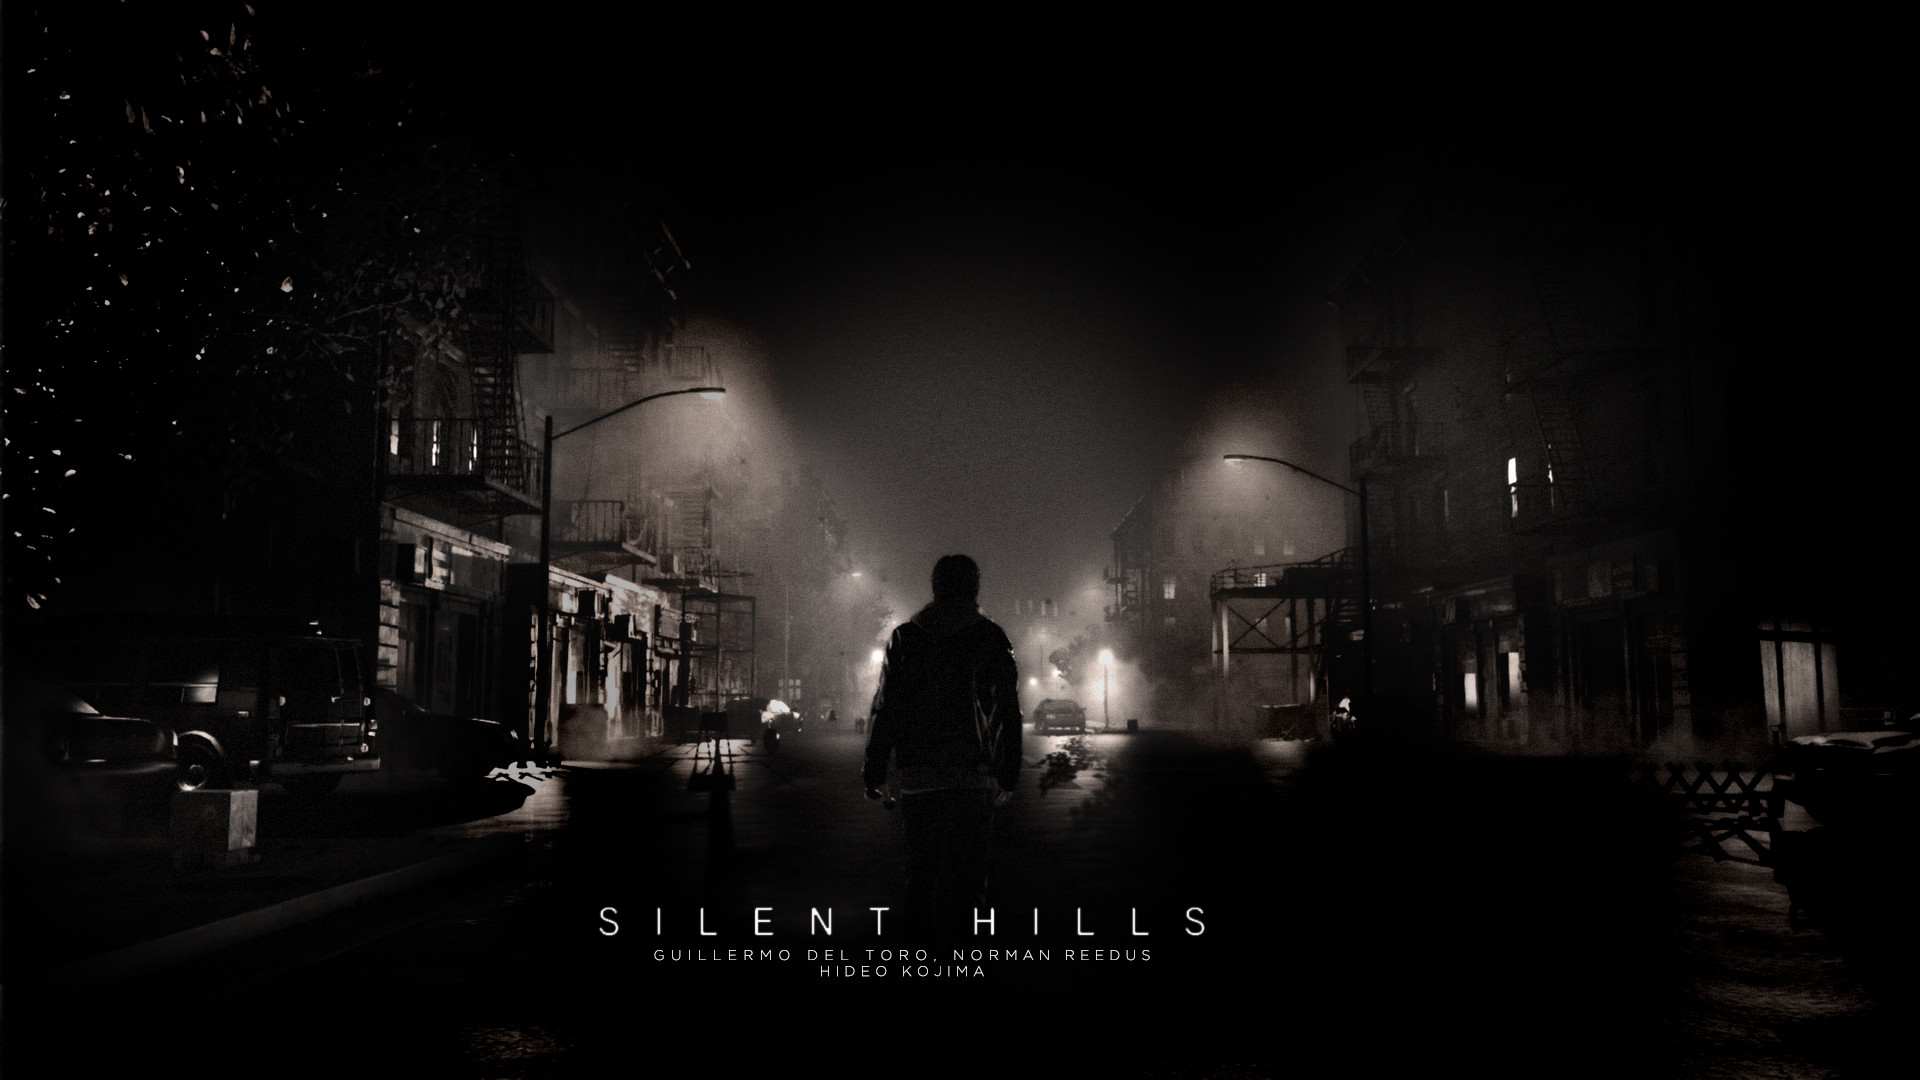 Konami interviene sul caso Silent Hills